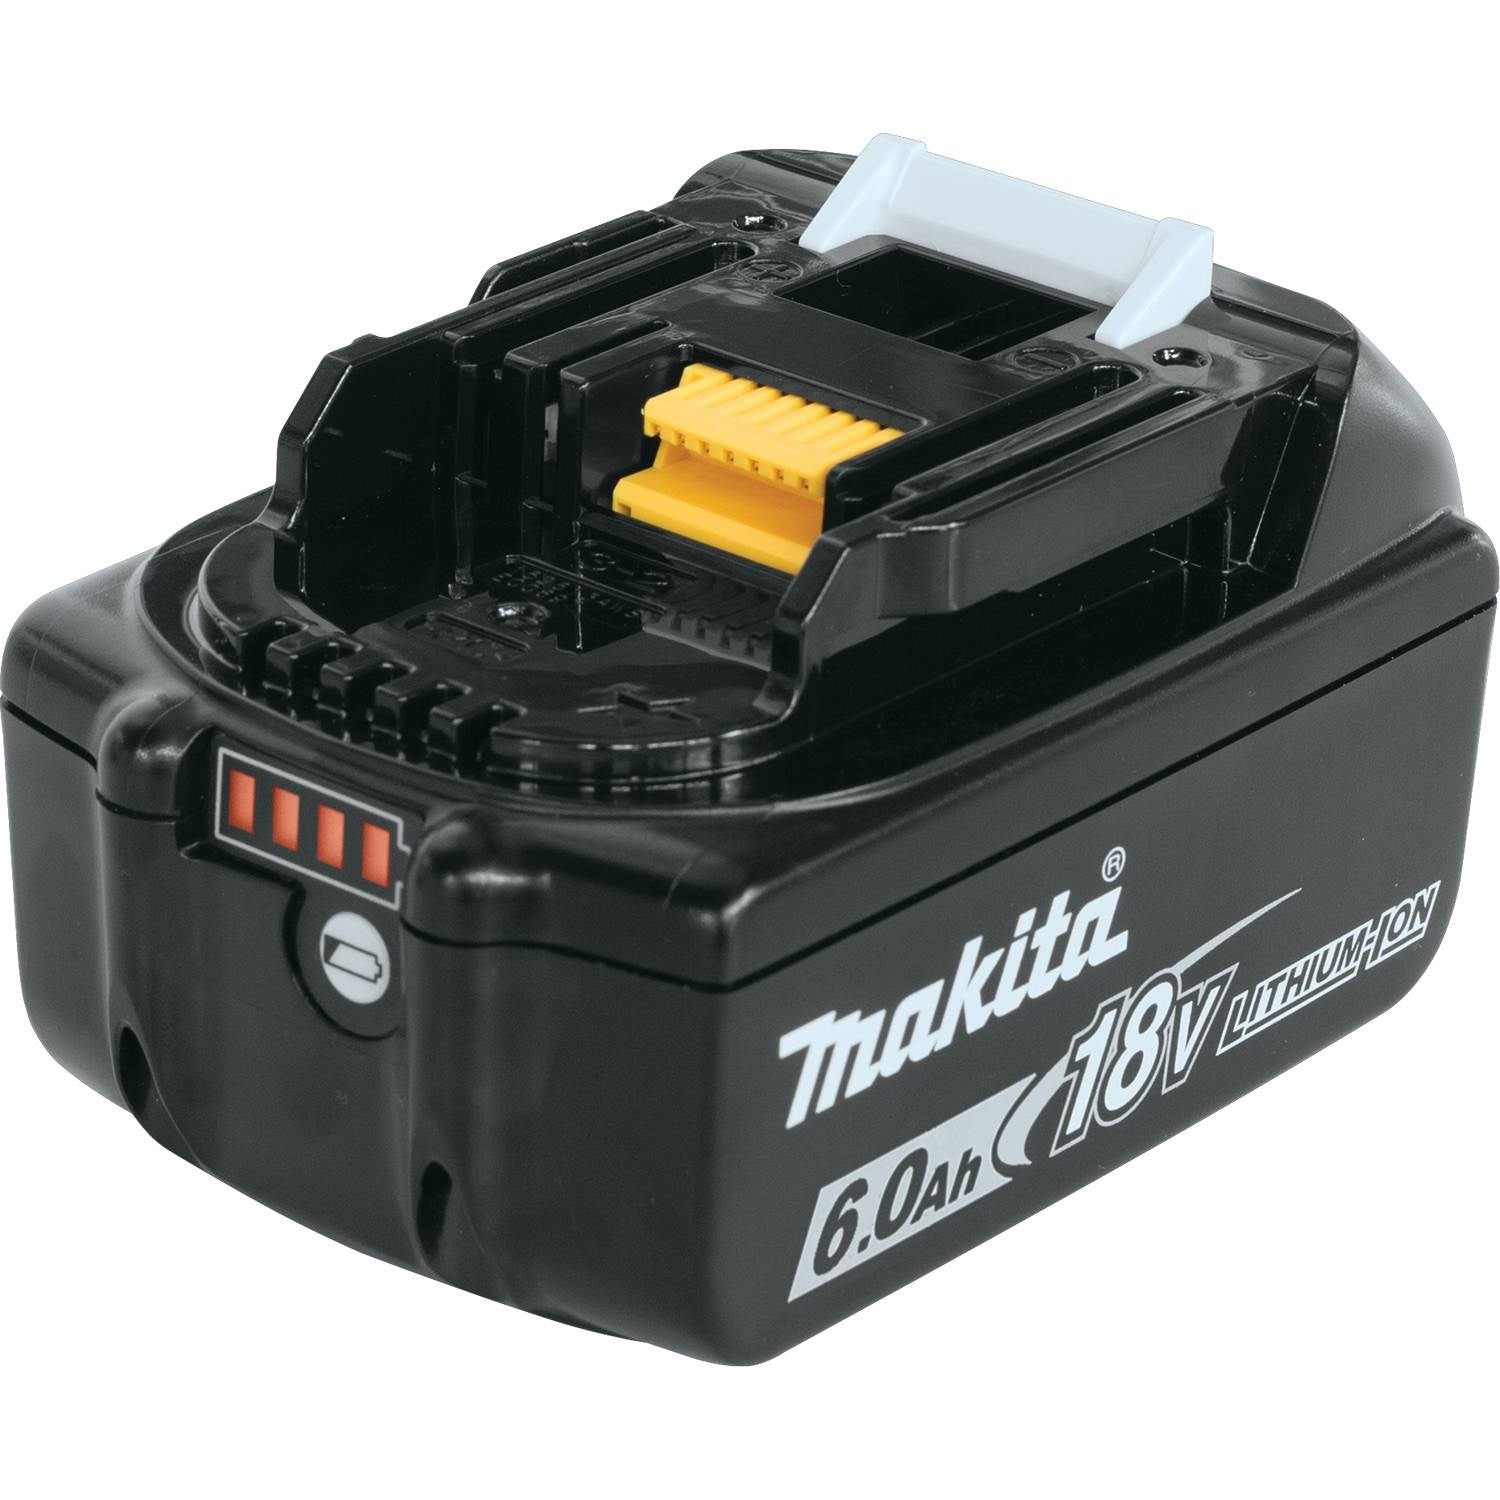 Makita BL1860B-2 18V 6.0 Ah LXT Lithium-Ion Battery 2-Pack